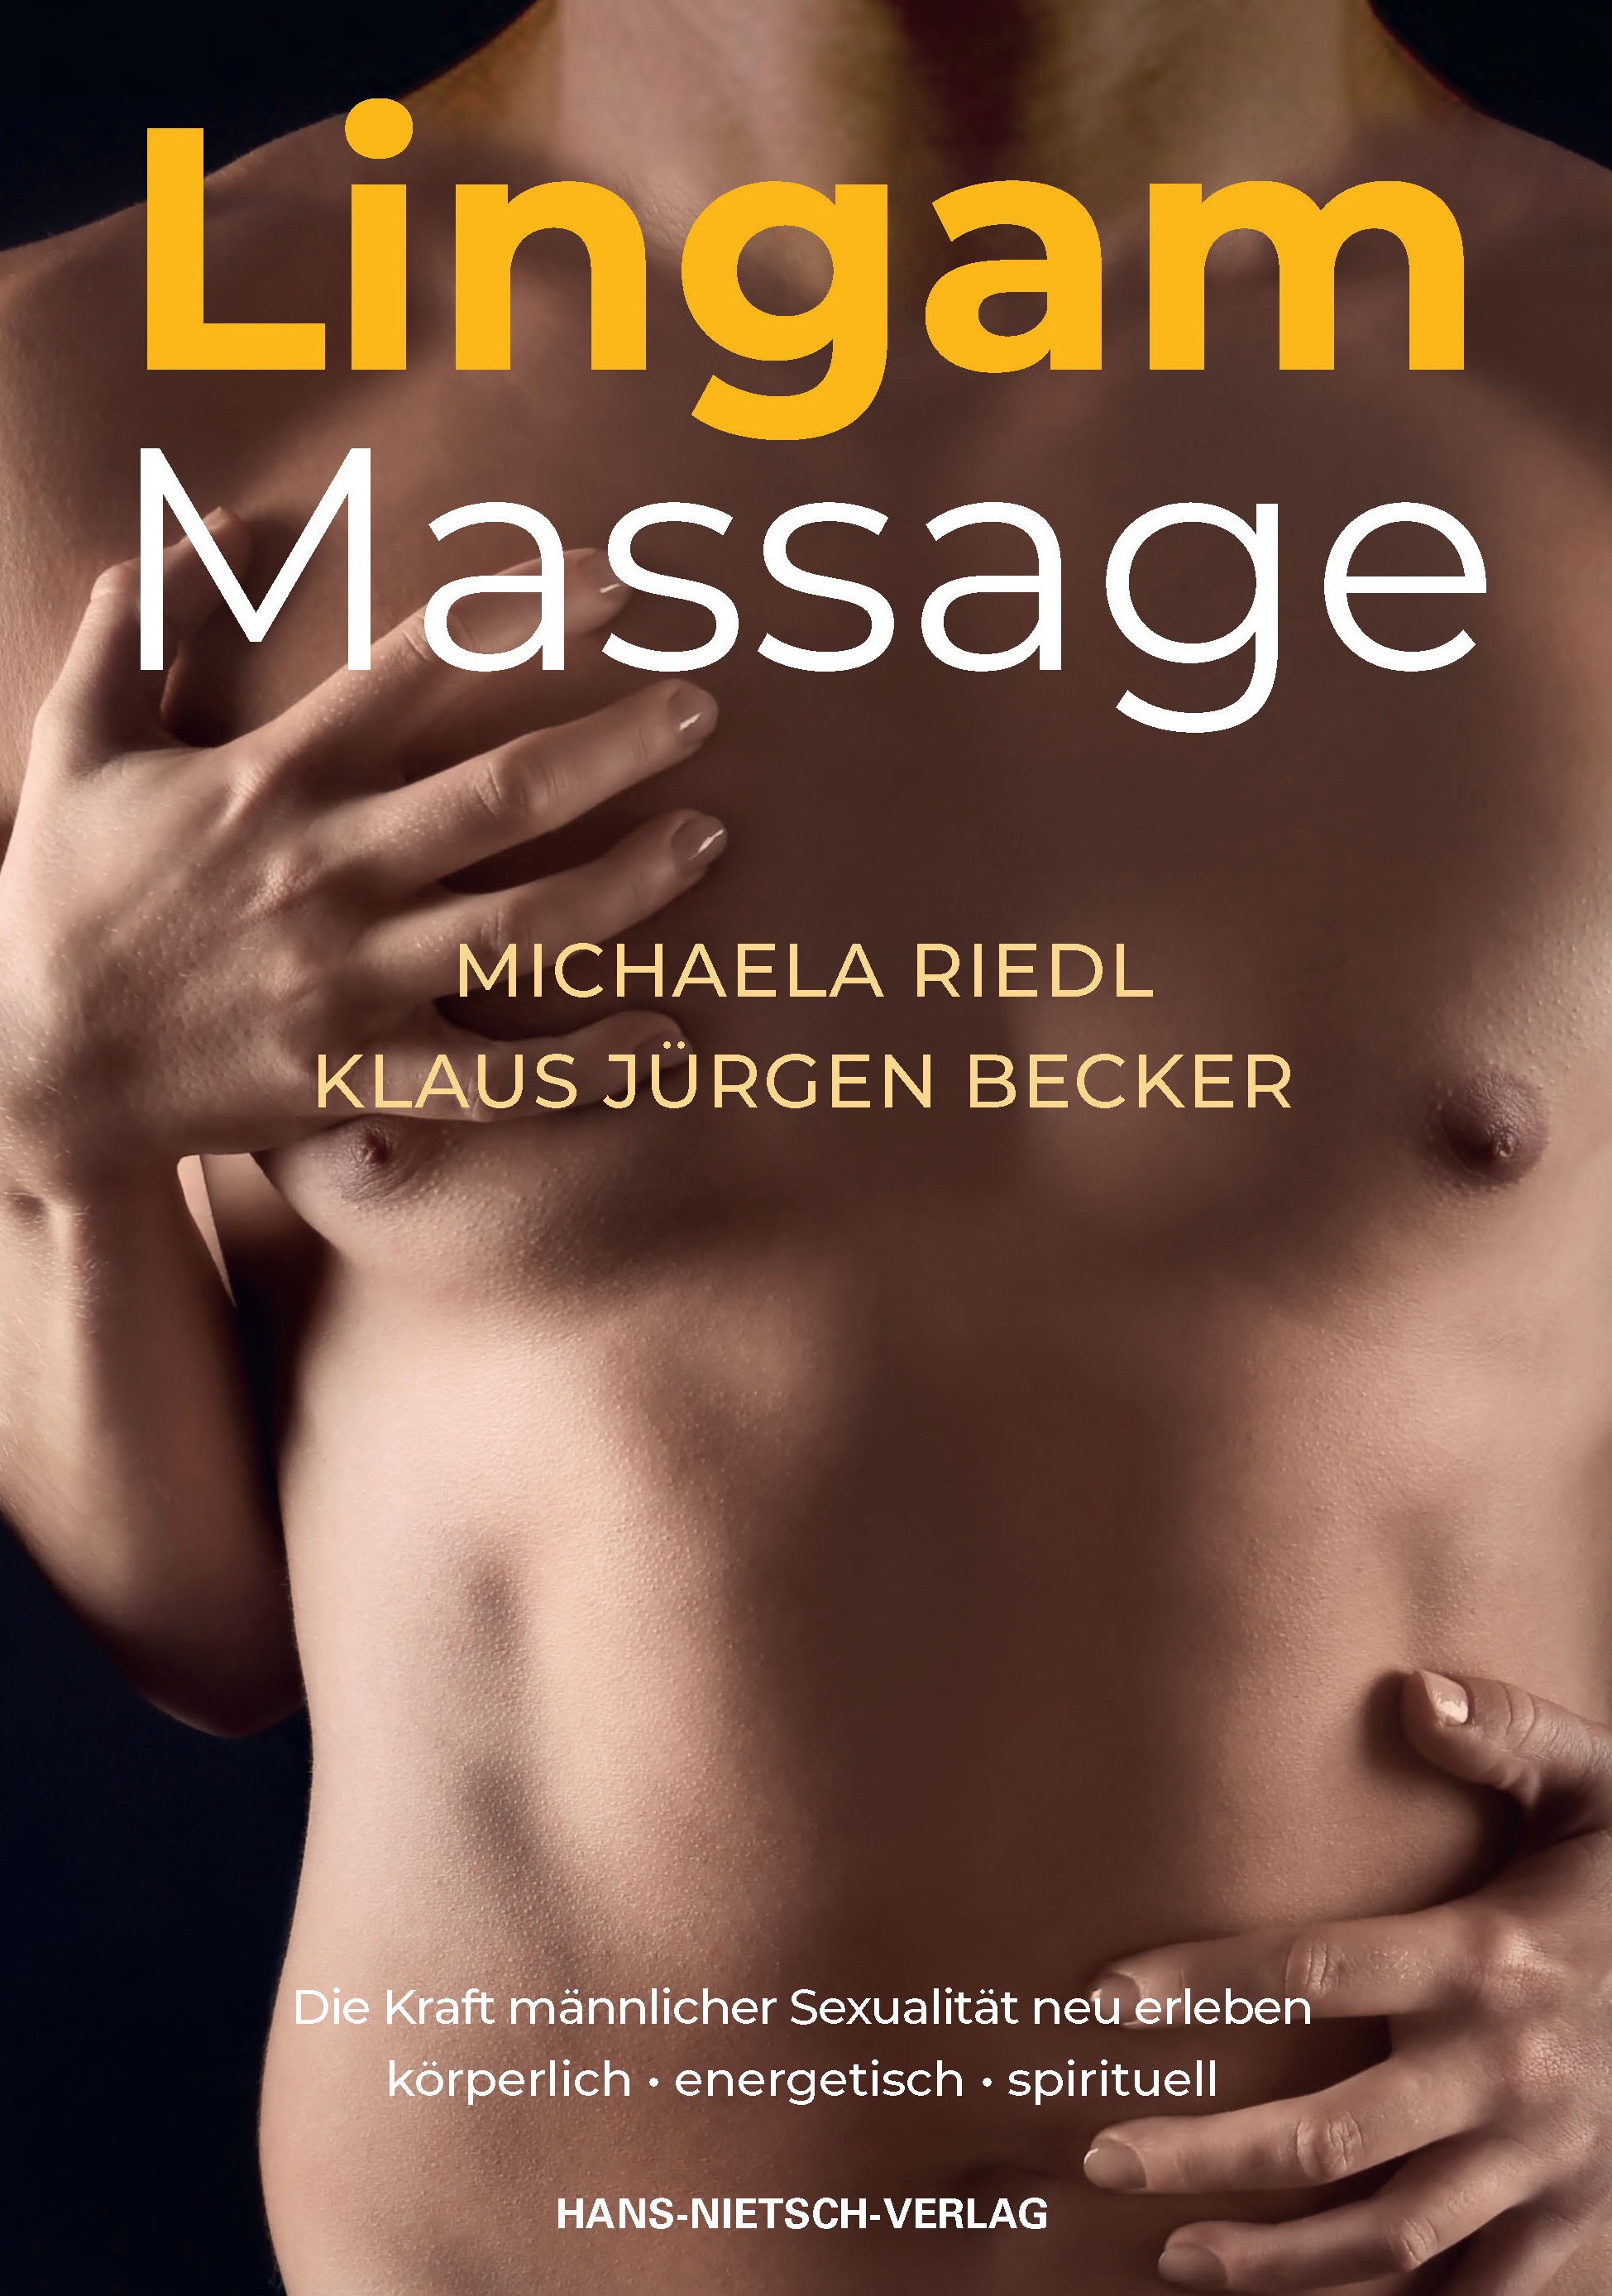 Lingam-Massage, jpg 1,3 MB.